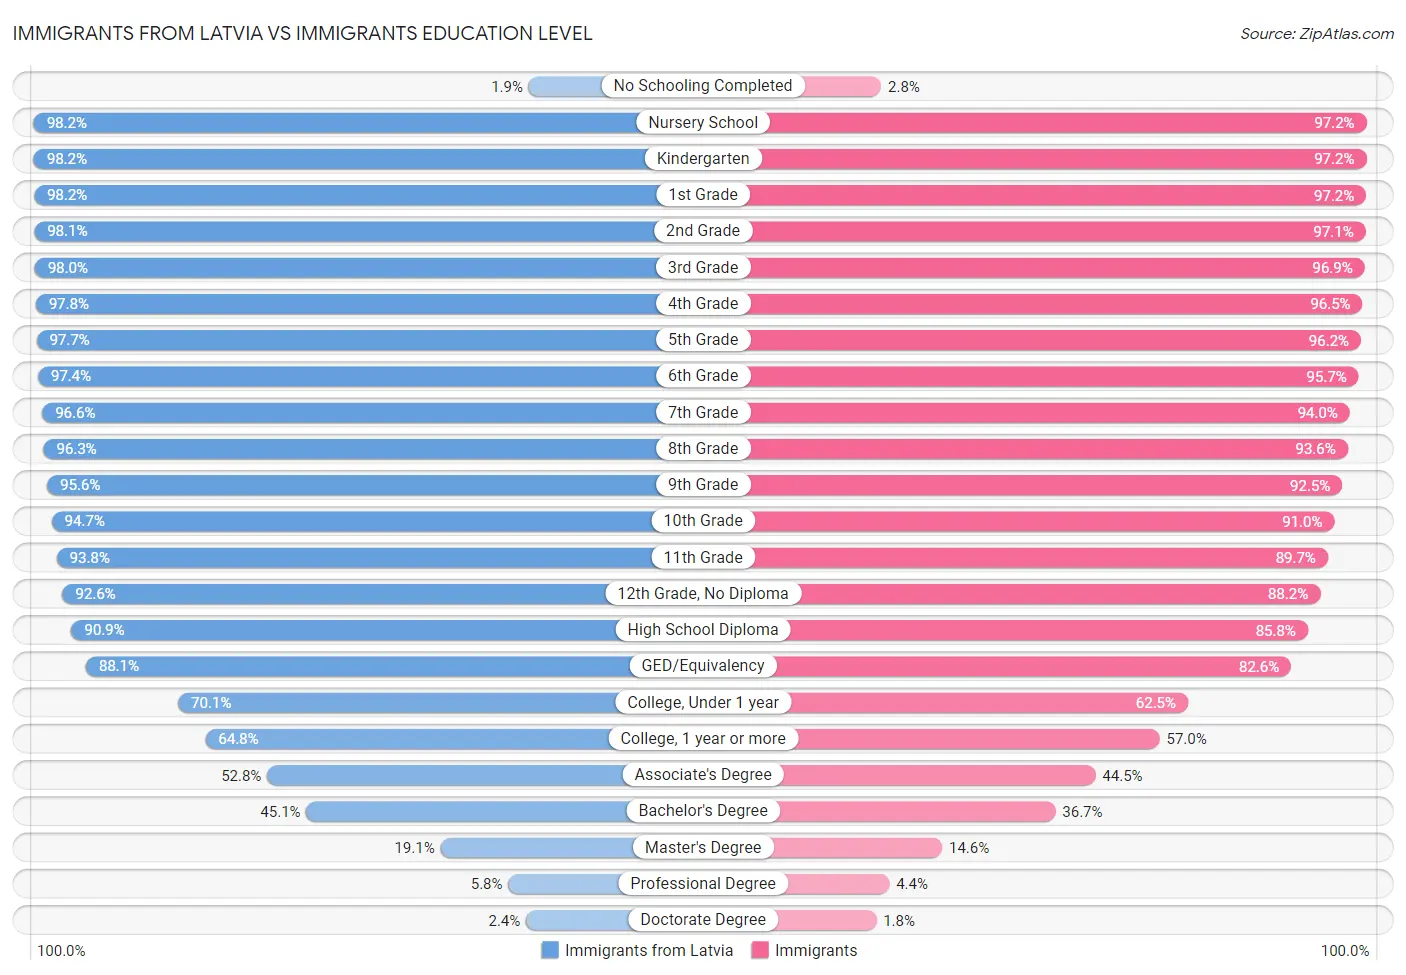 Immigrants from Latvia vs Immigrants Education Level